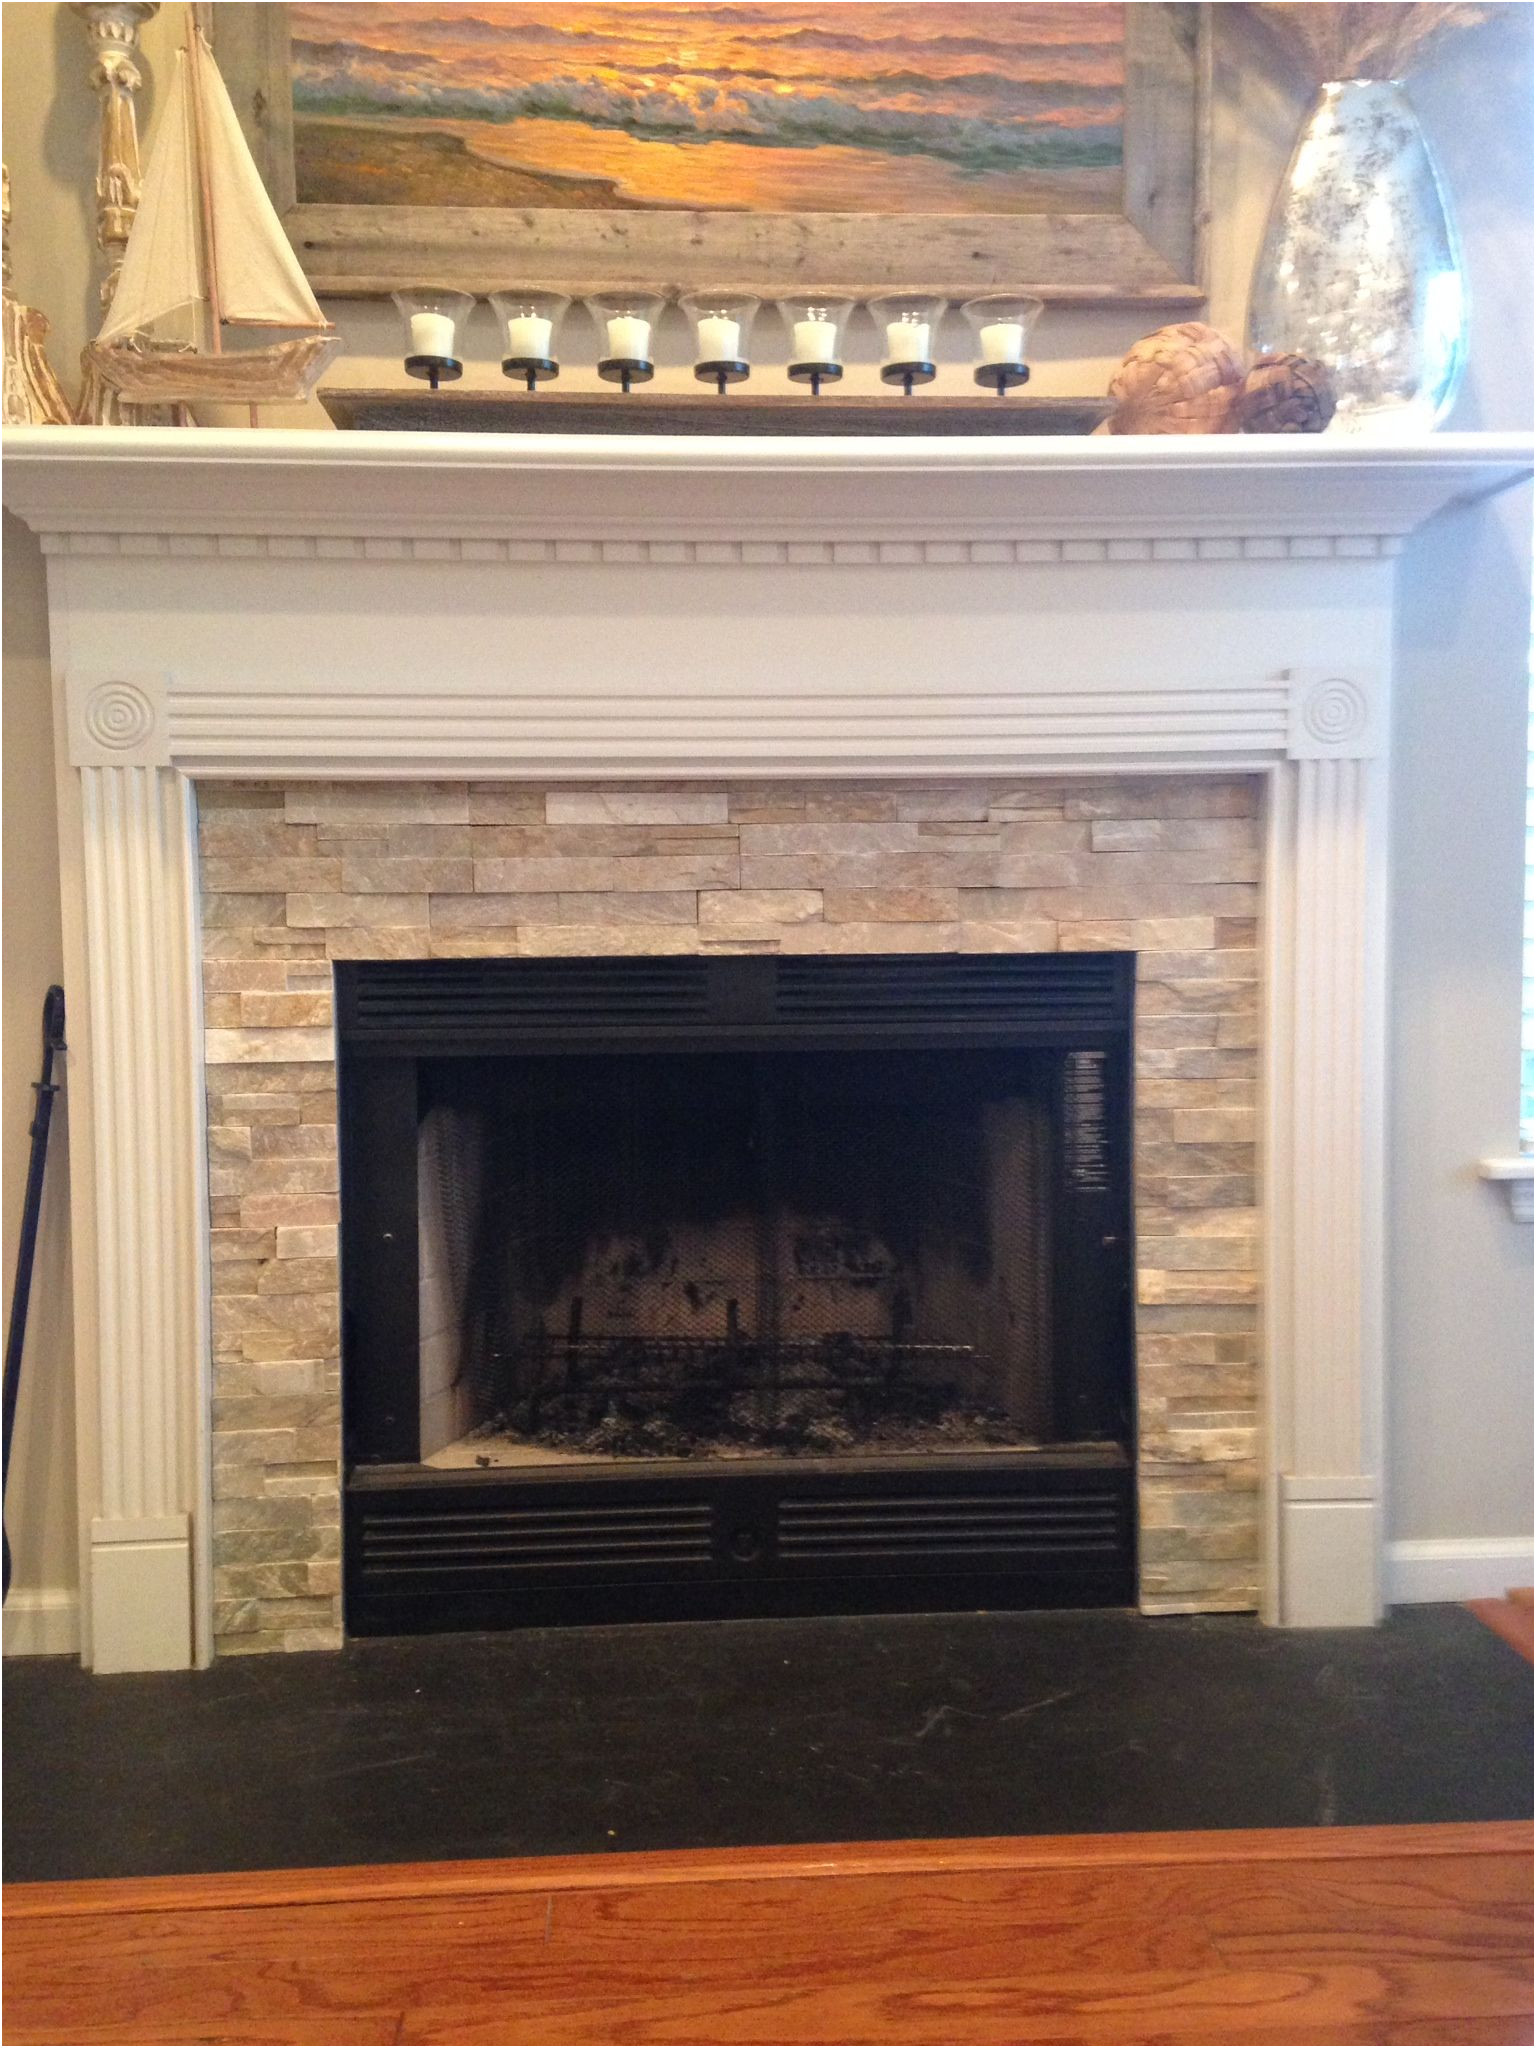 Elegant Fireplace Design with Stone